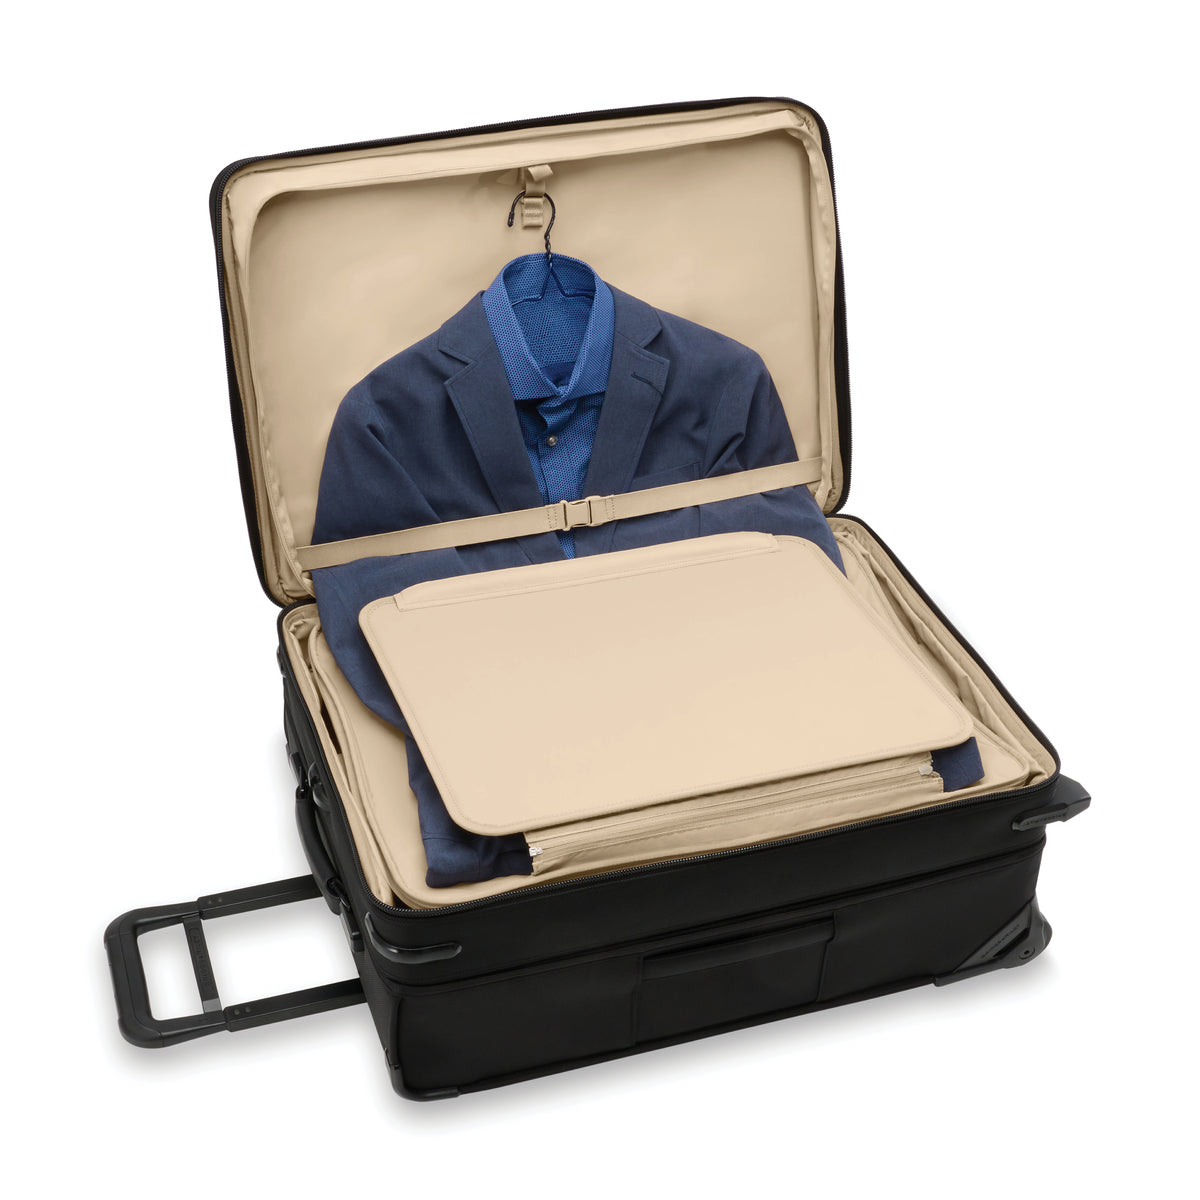 Briggs & Riley Baseline Medium Expandable Upright Carry On Luggage